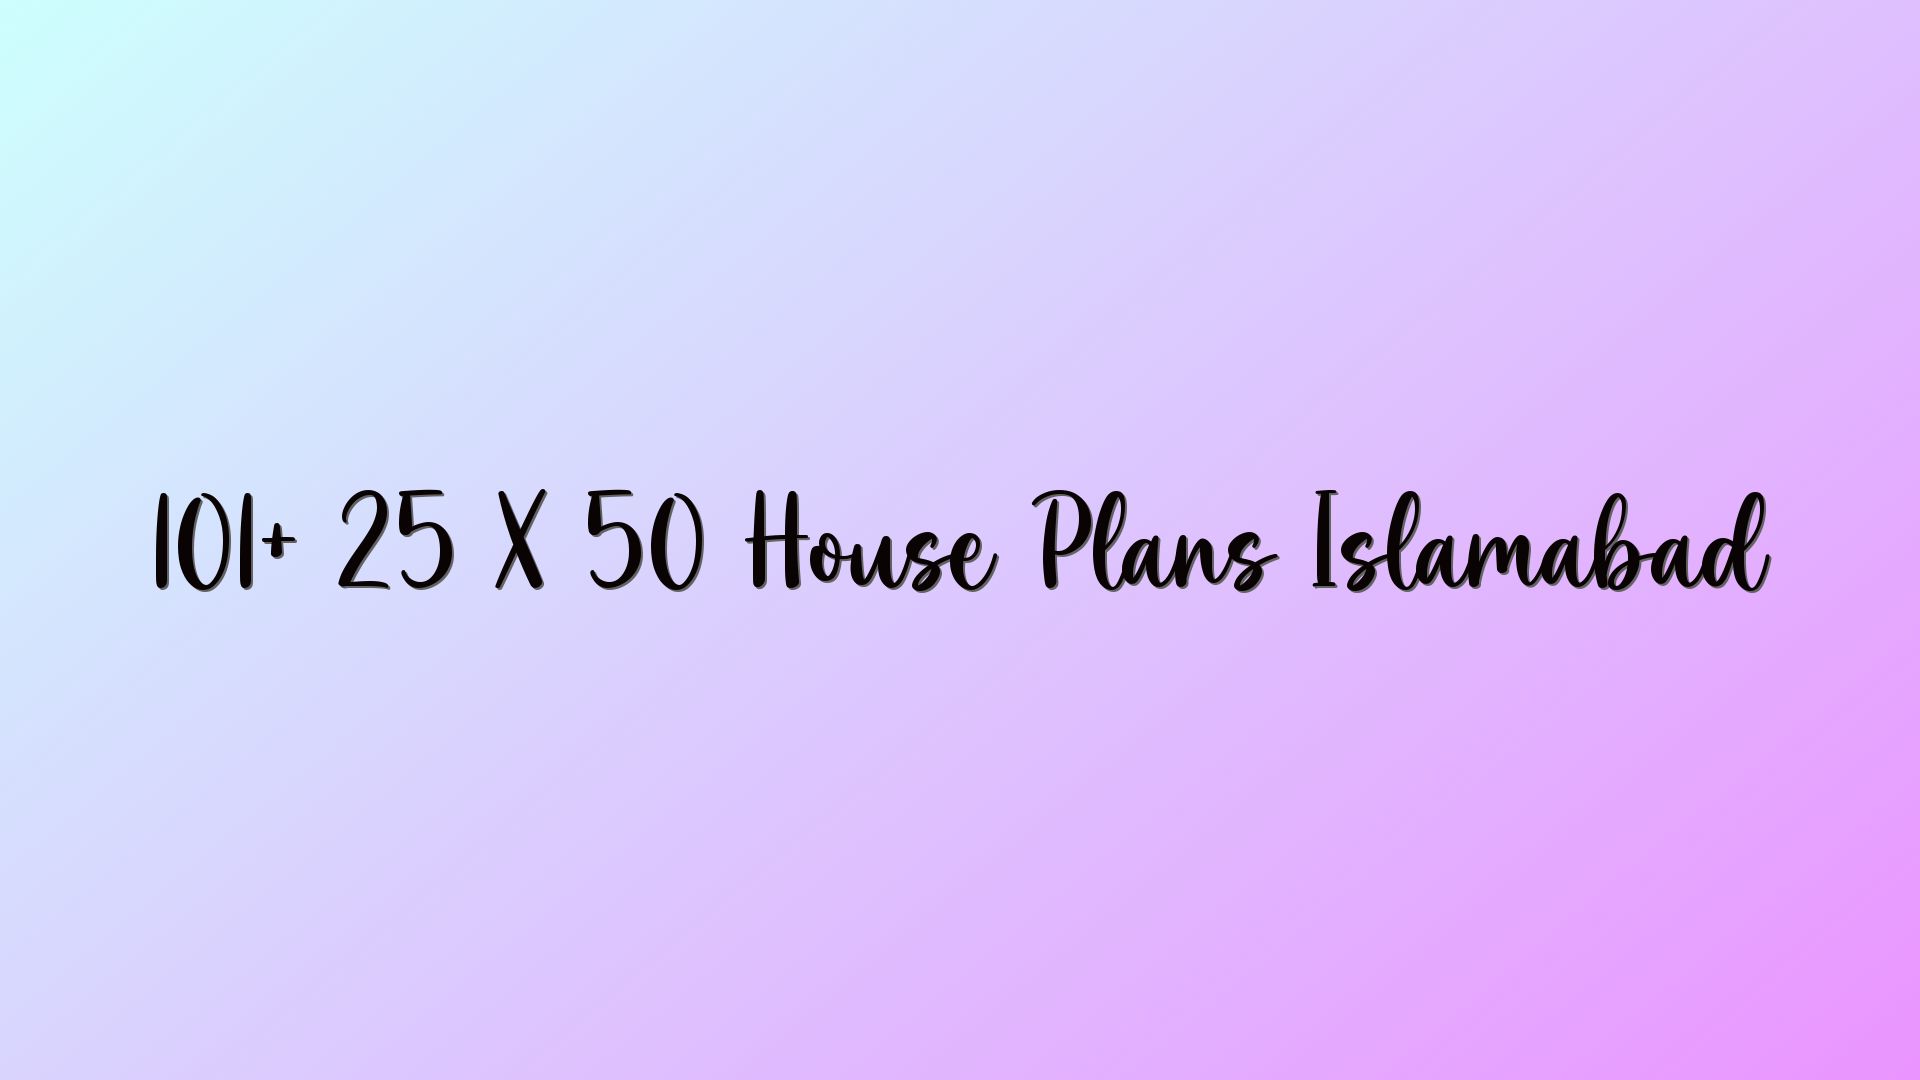 101+ 25 X 50 House Plans Islamabad